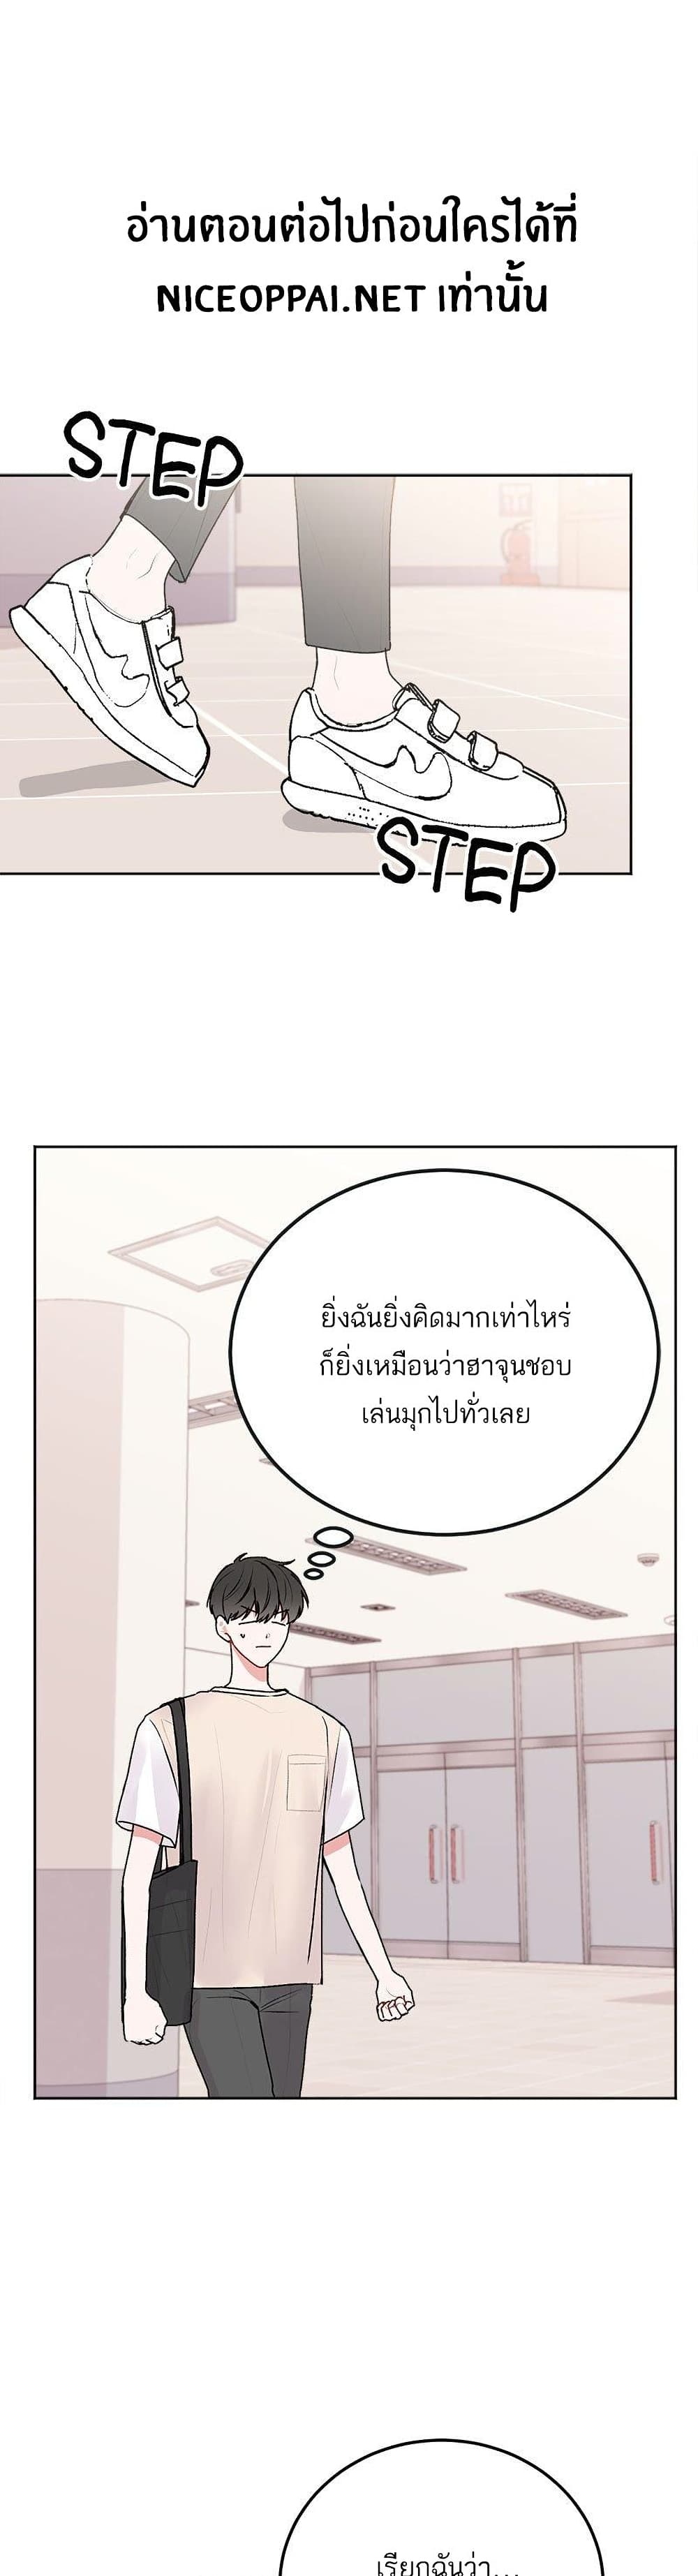 Don't cry sunbae 27 02